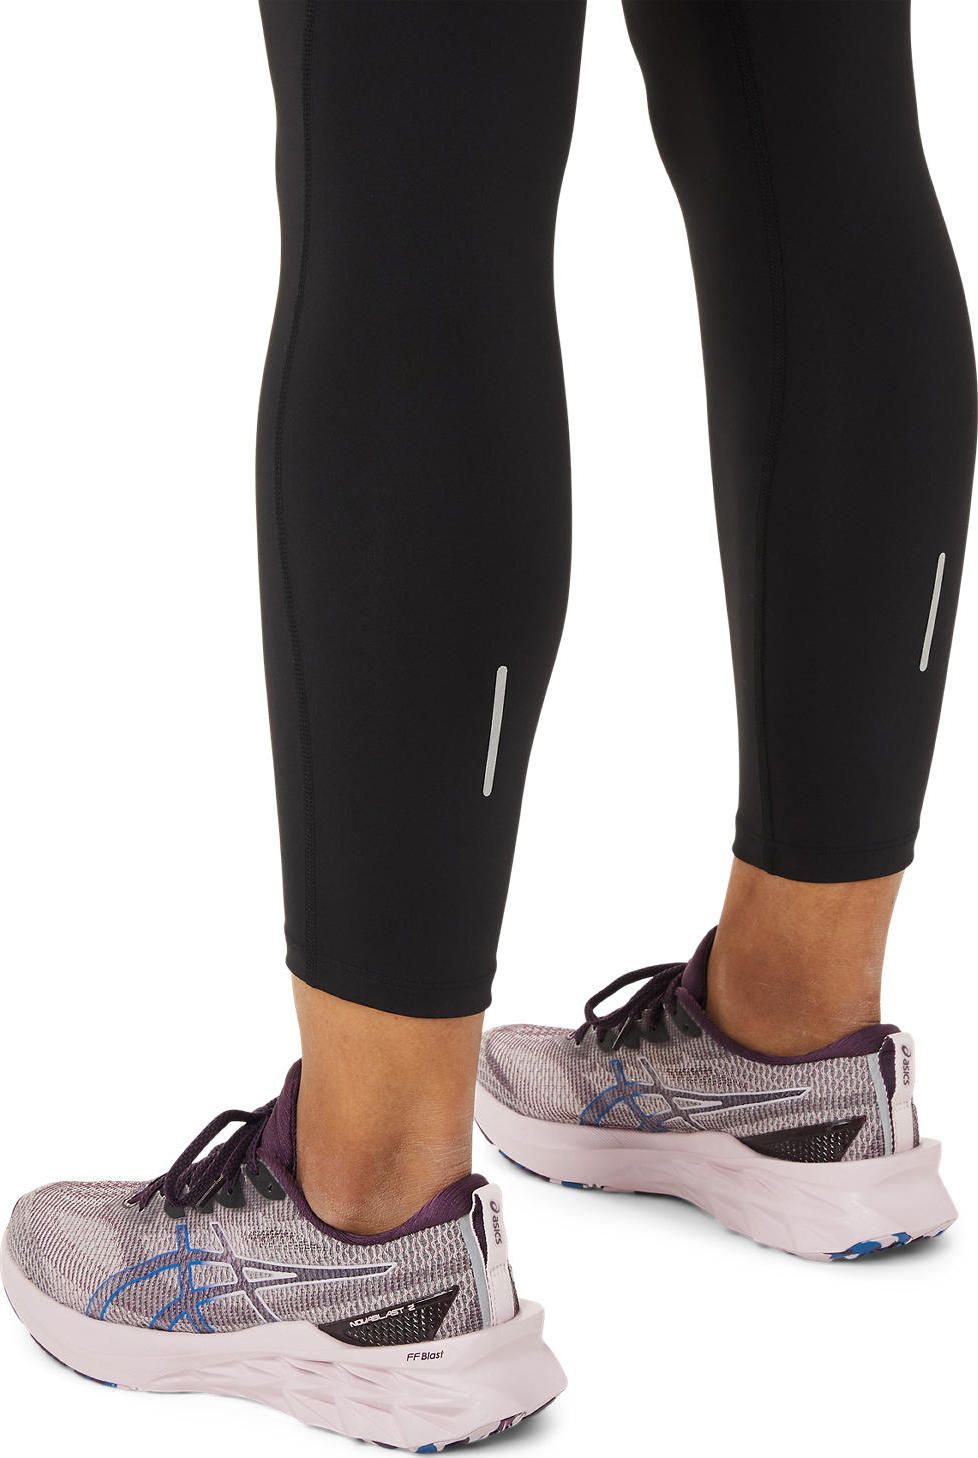  Nike Women's Racer Running Tight Black/Black Medium